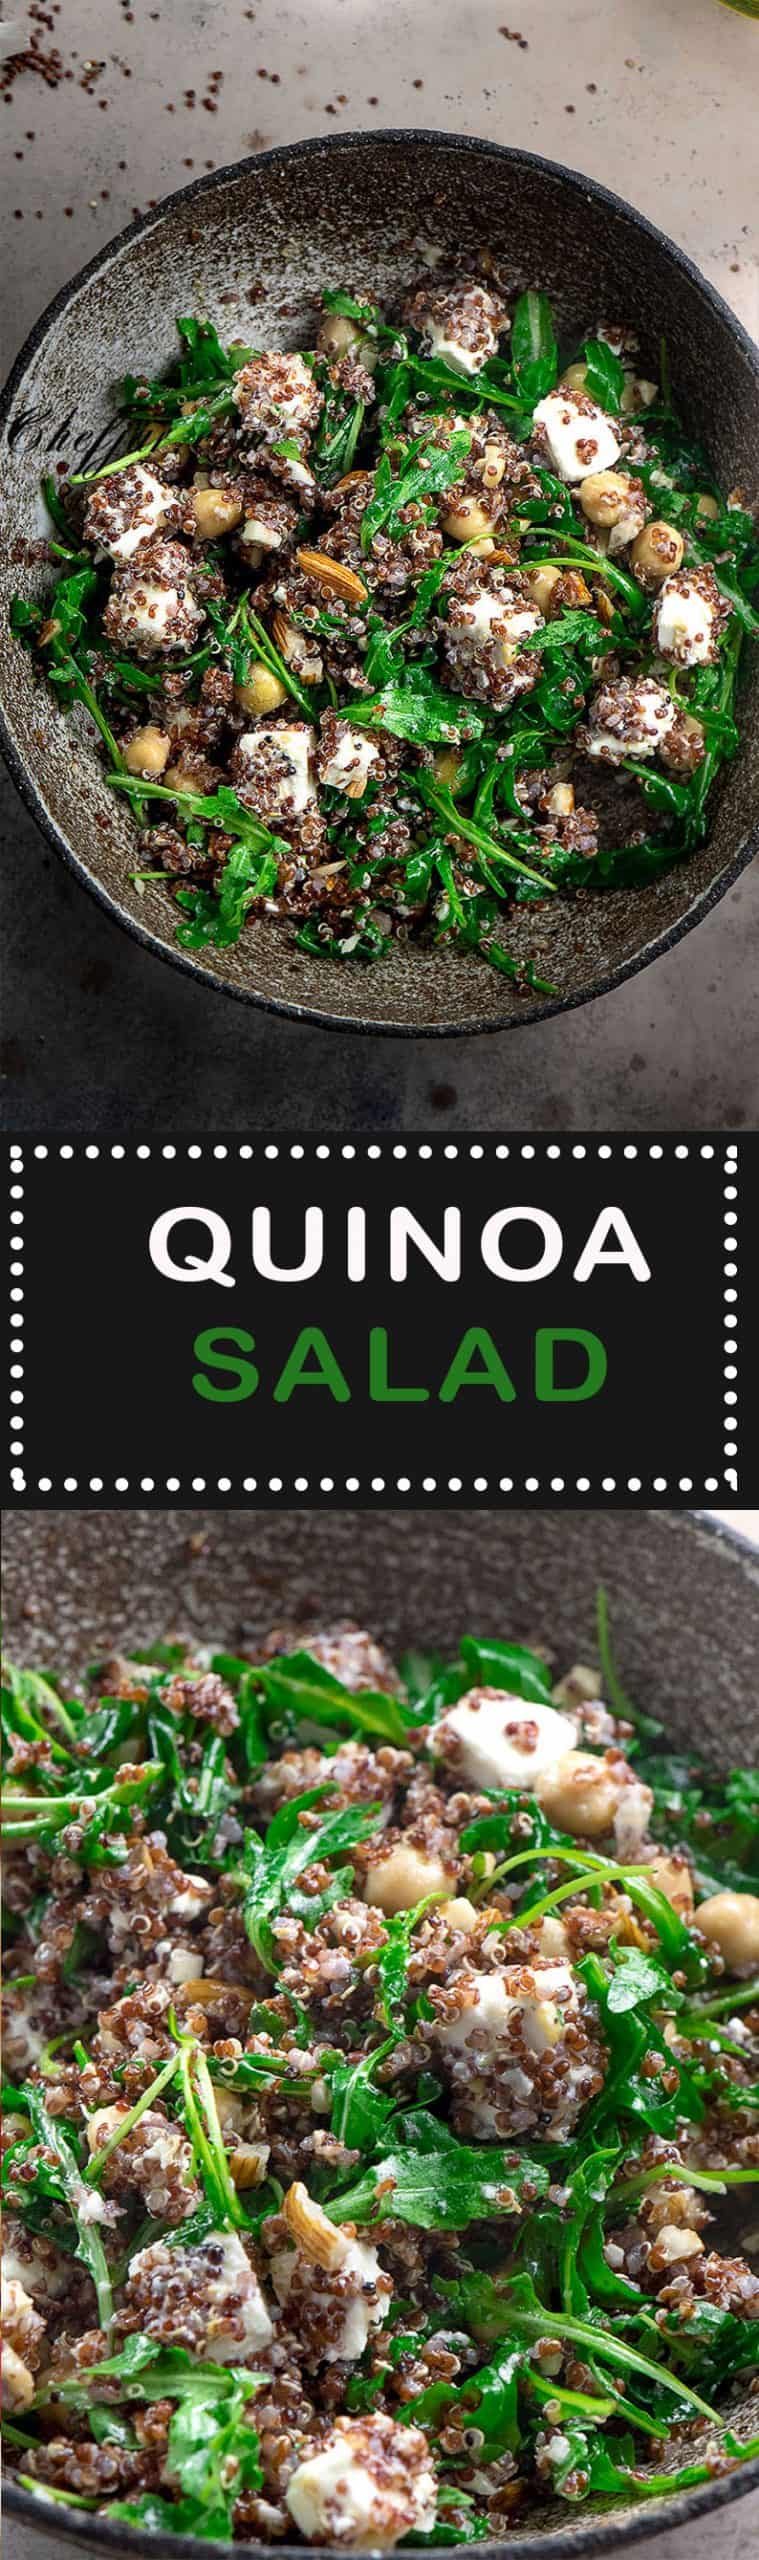 quinoa-salad-with-feta-cheese